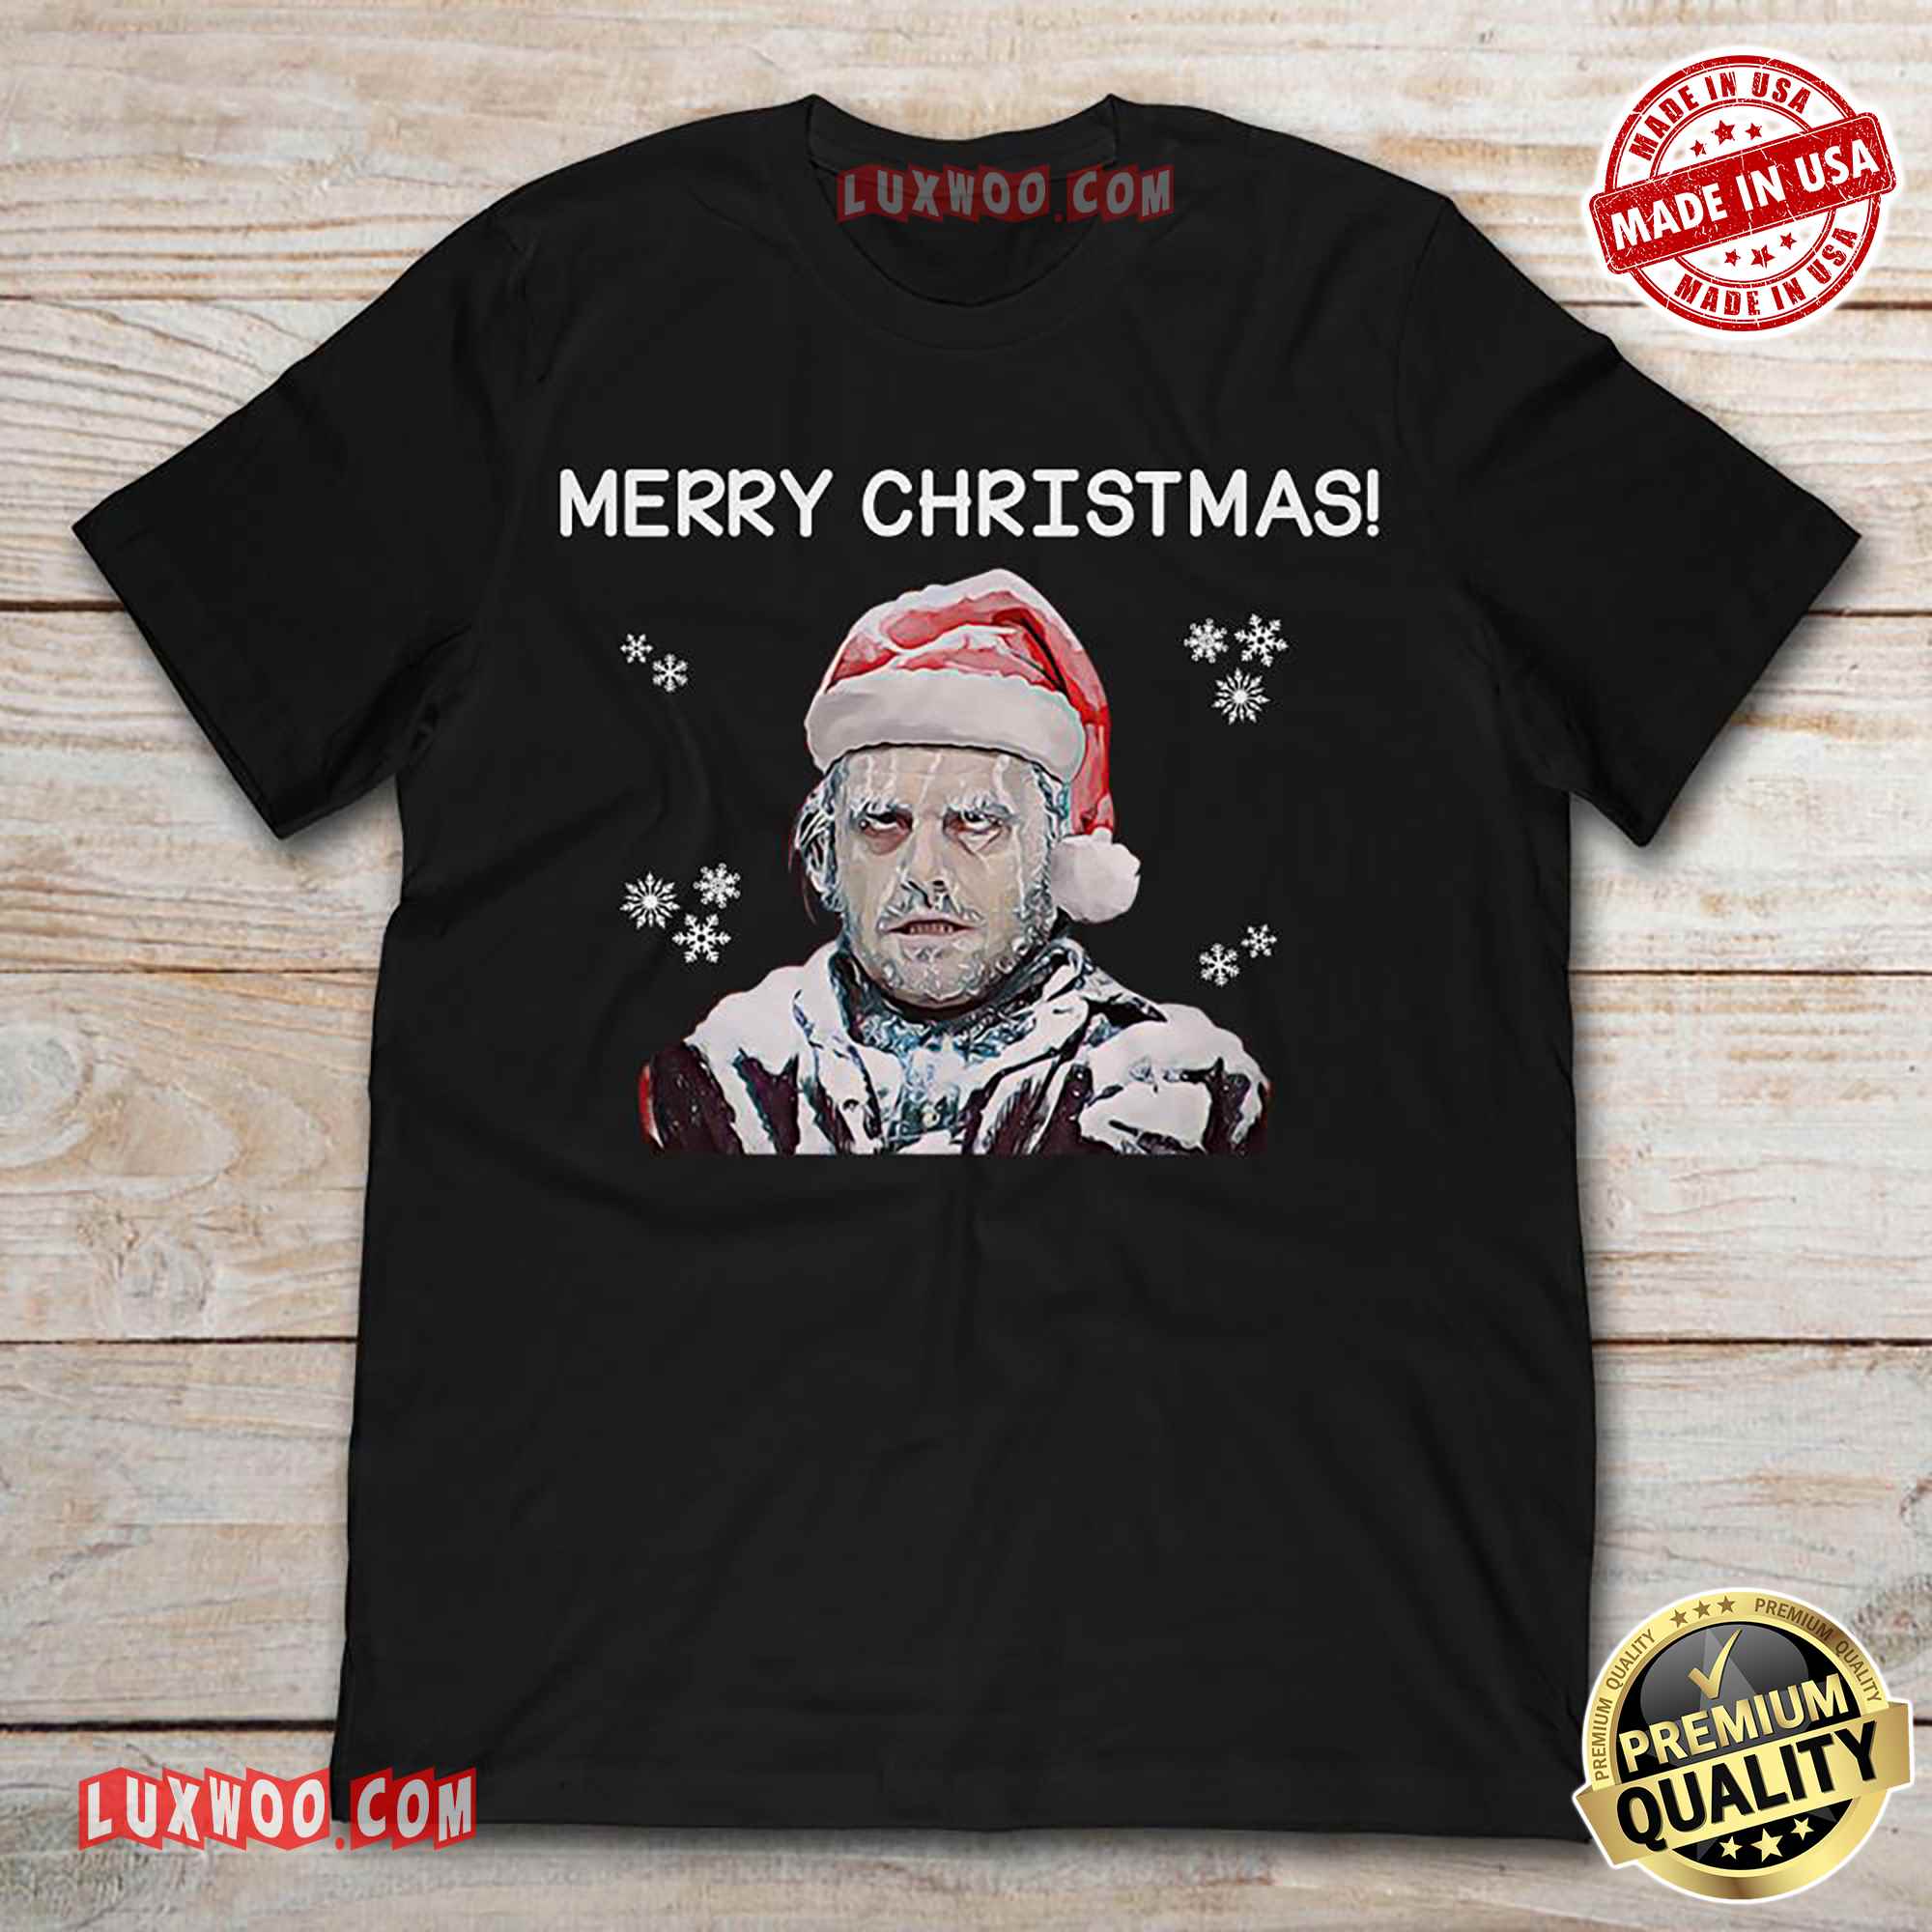 Jack Nicholson Merry Christmas The Shining Frozen Tee Shirt